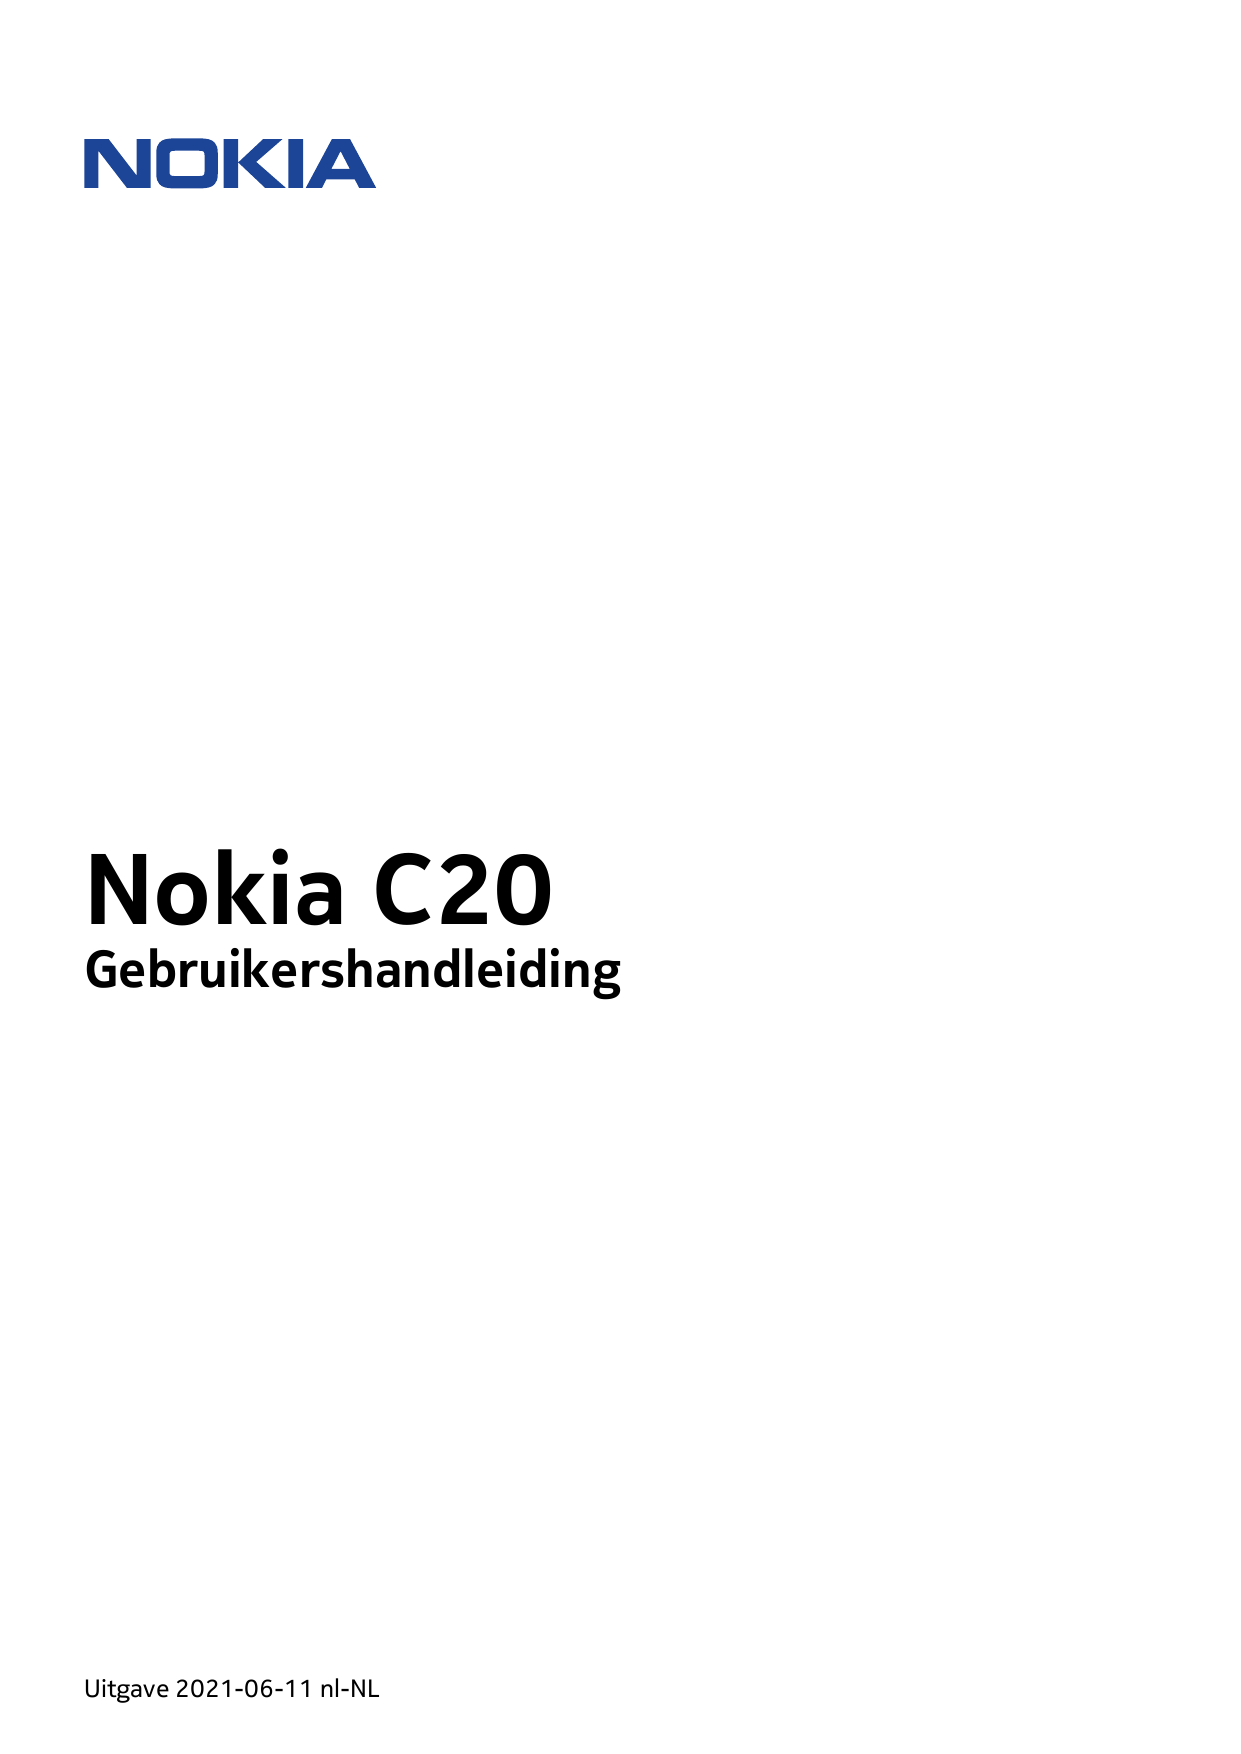 Nokia C20GebruikershandleidingUitgave 2021-06-11 nl-NL